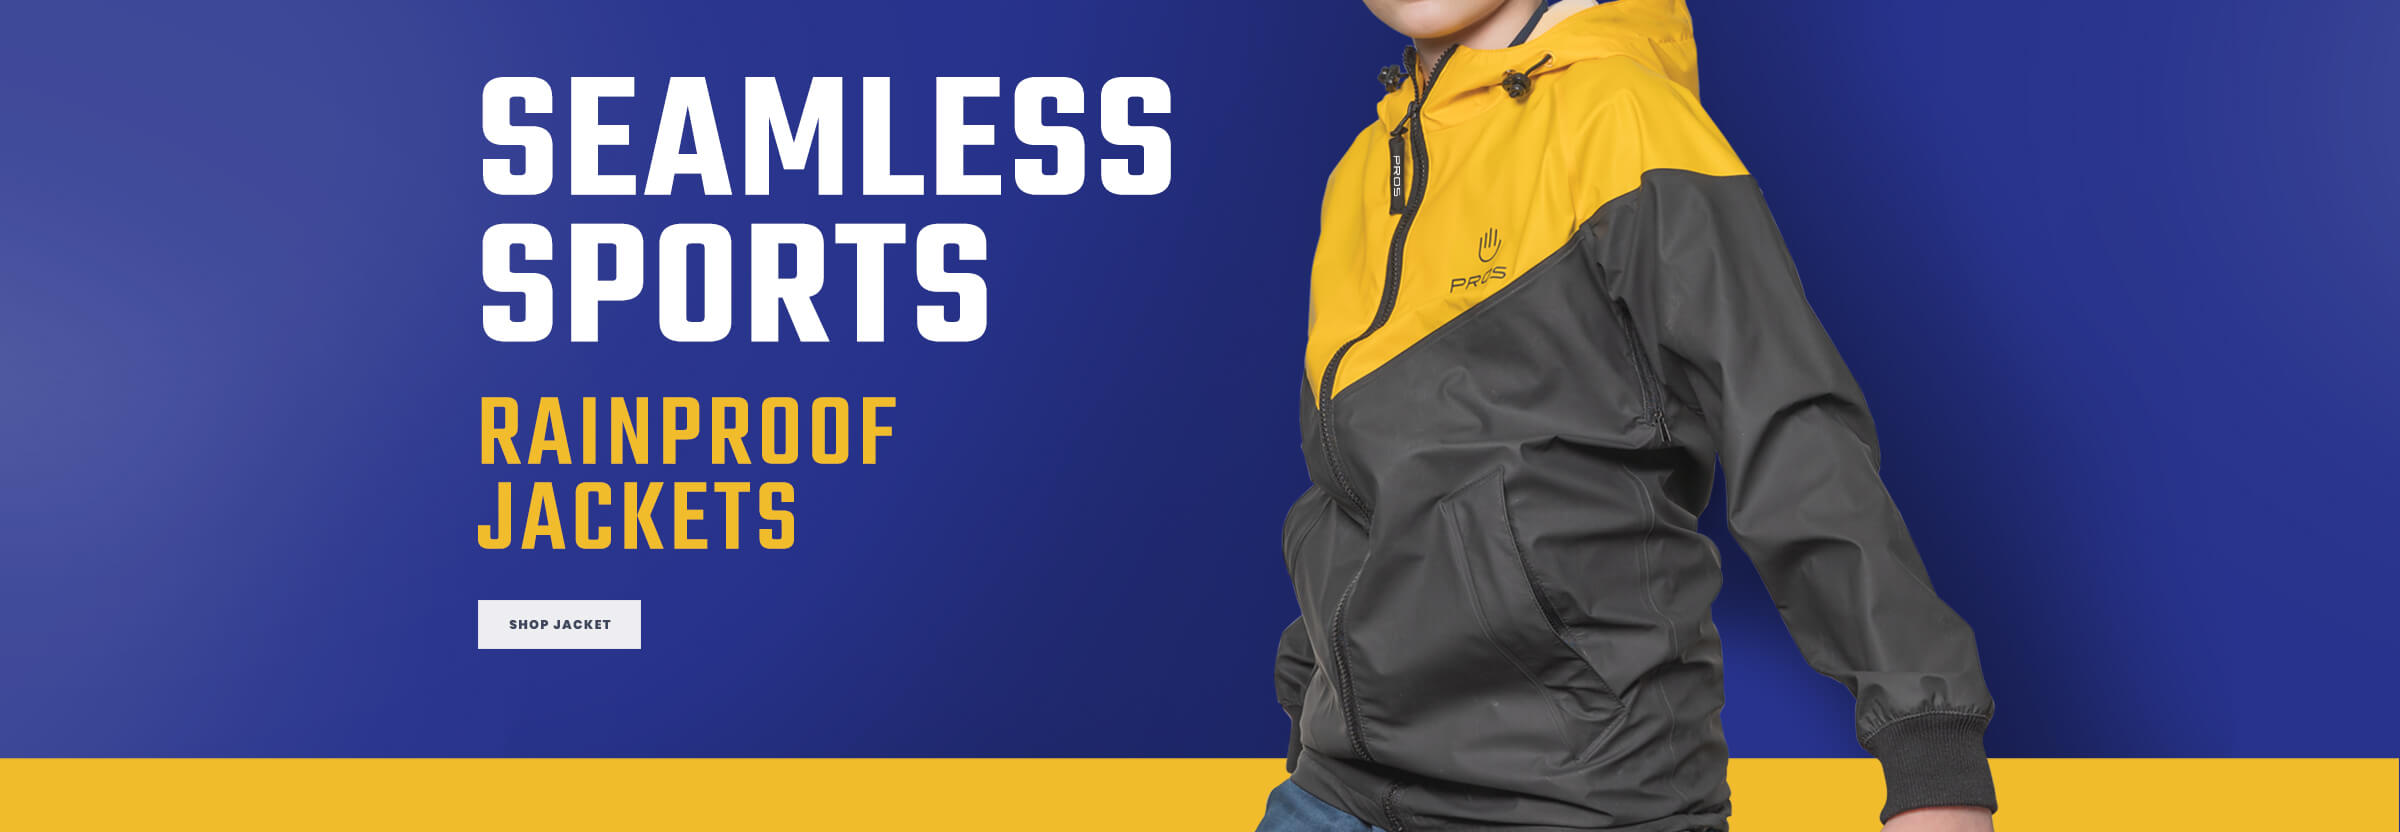 seamless sports rainproof jackets